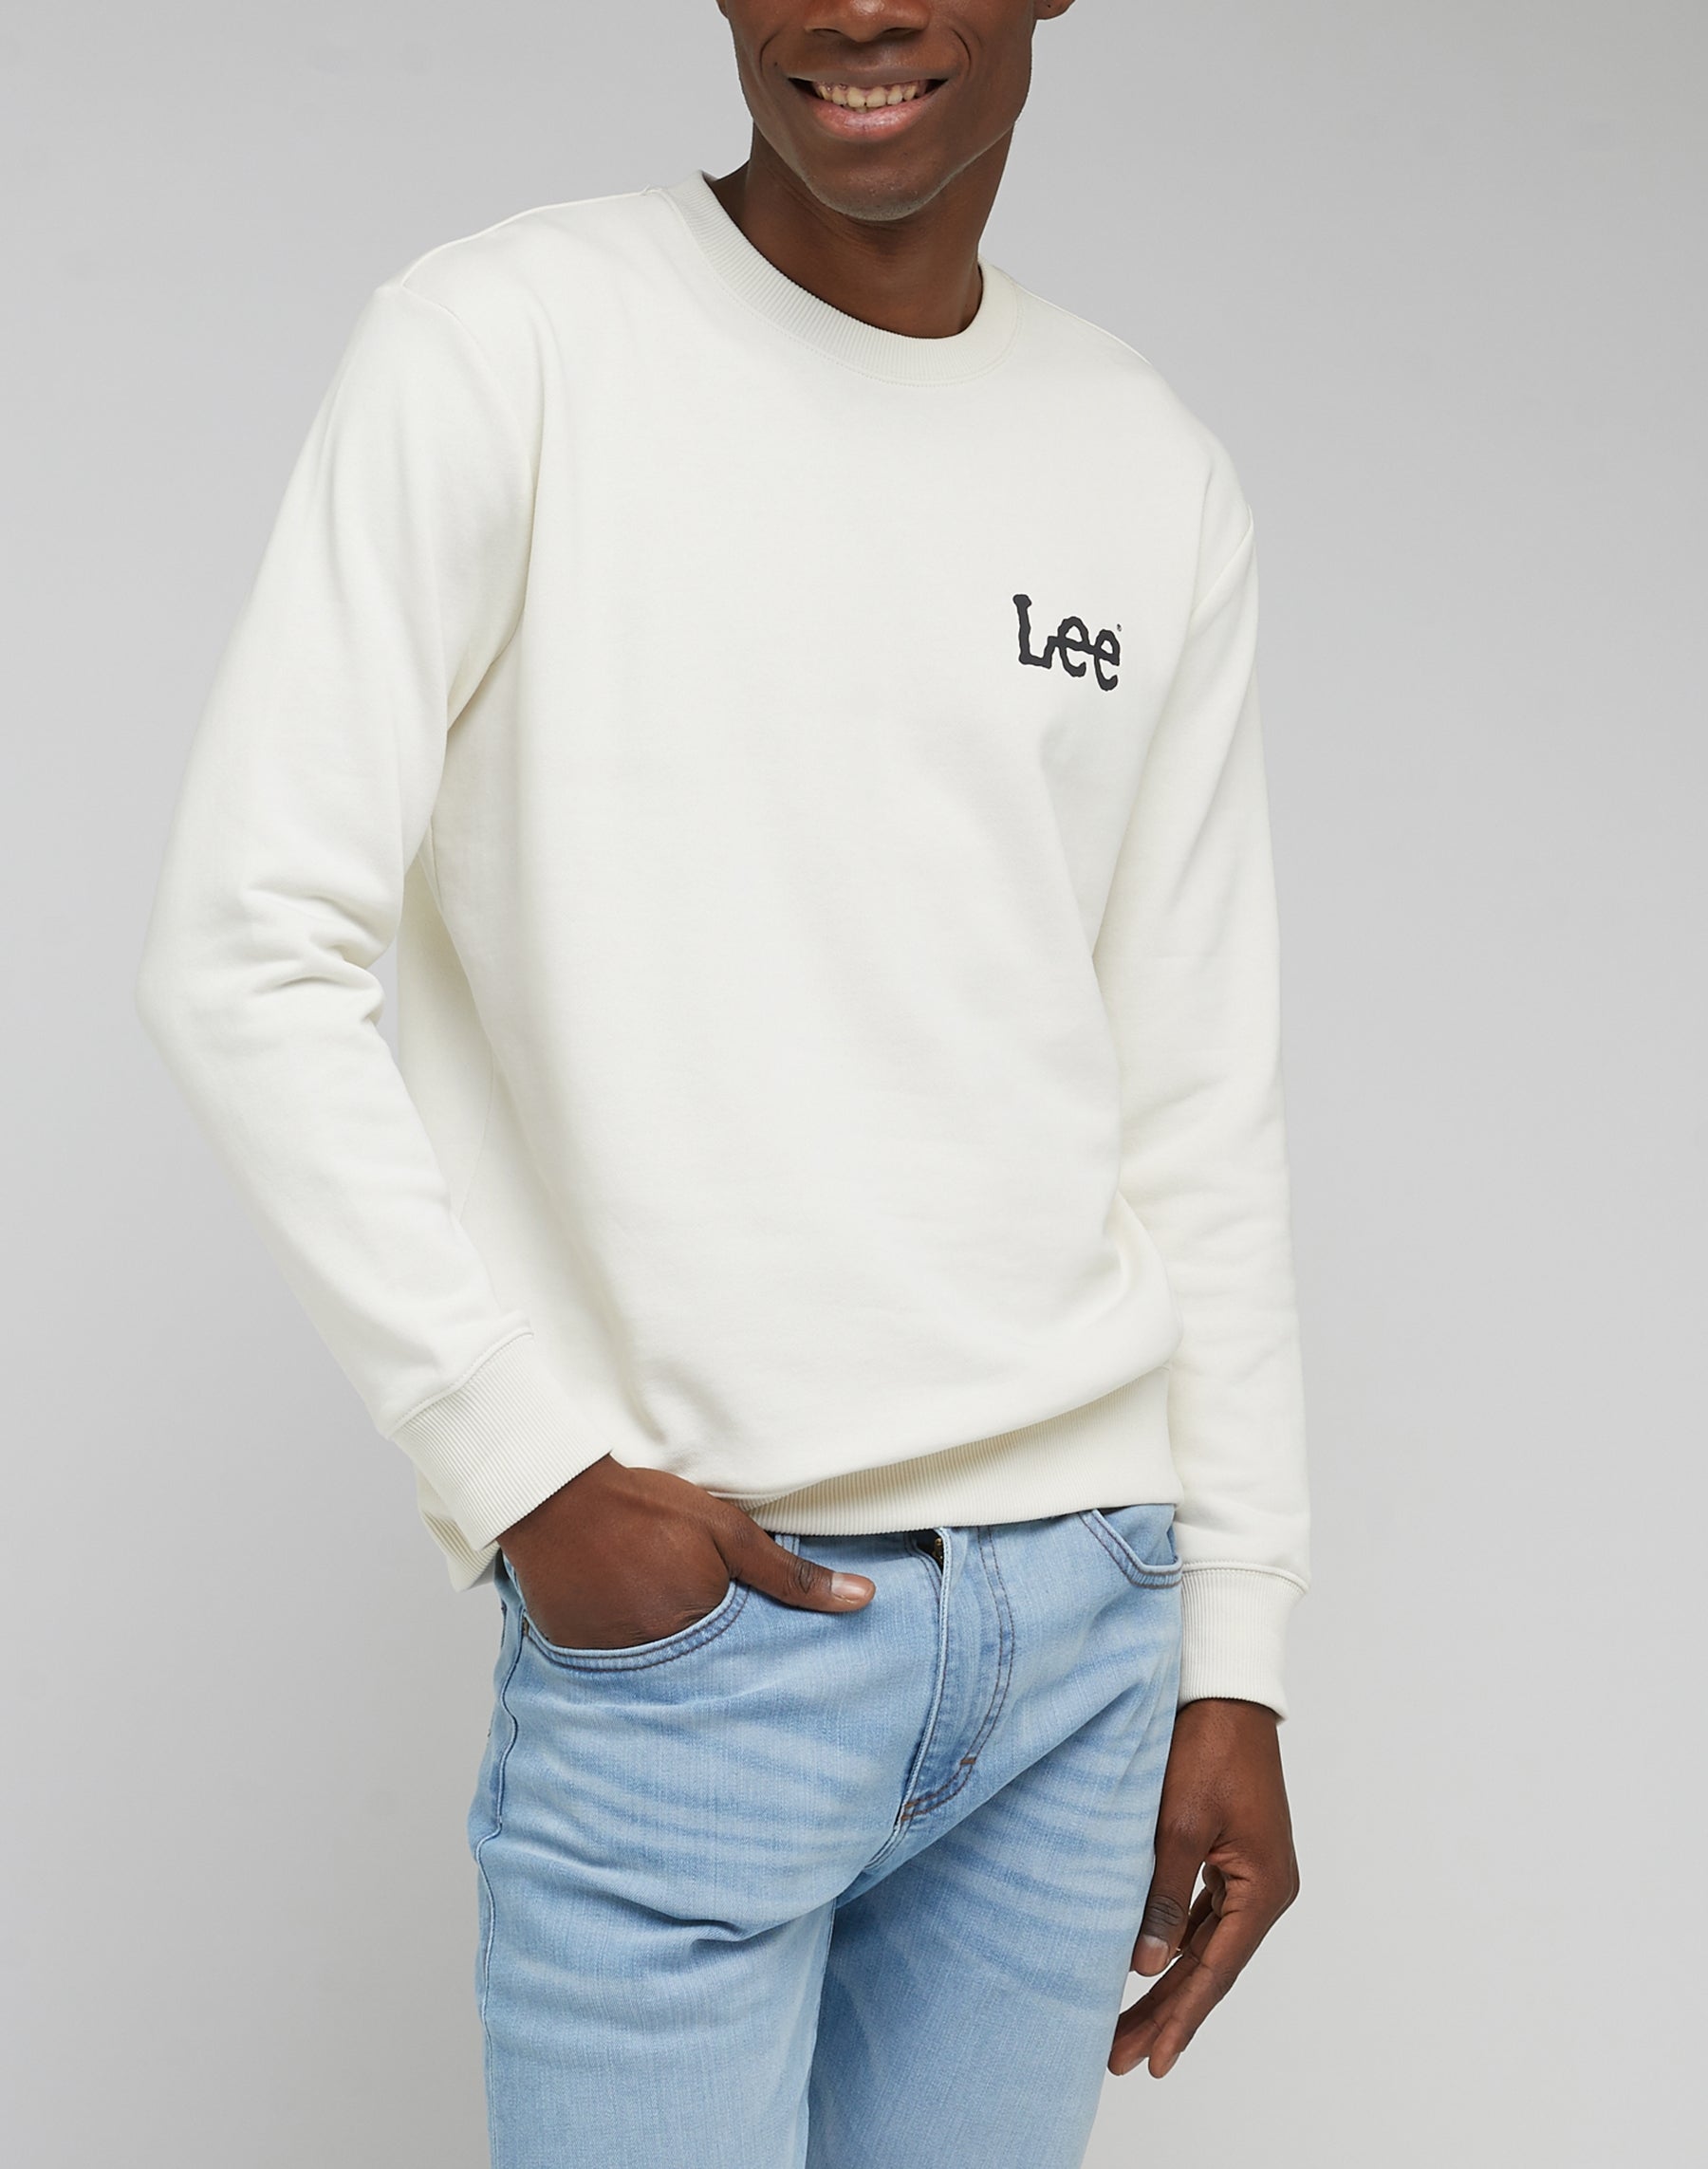 Wobbly Lee Sweatshirt in Ecru Sweatshirts Lee   